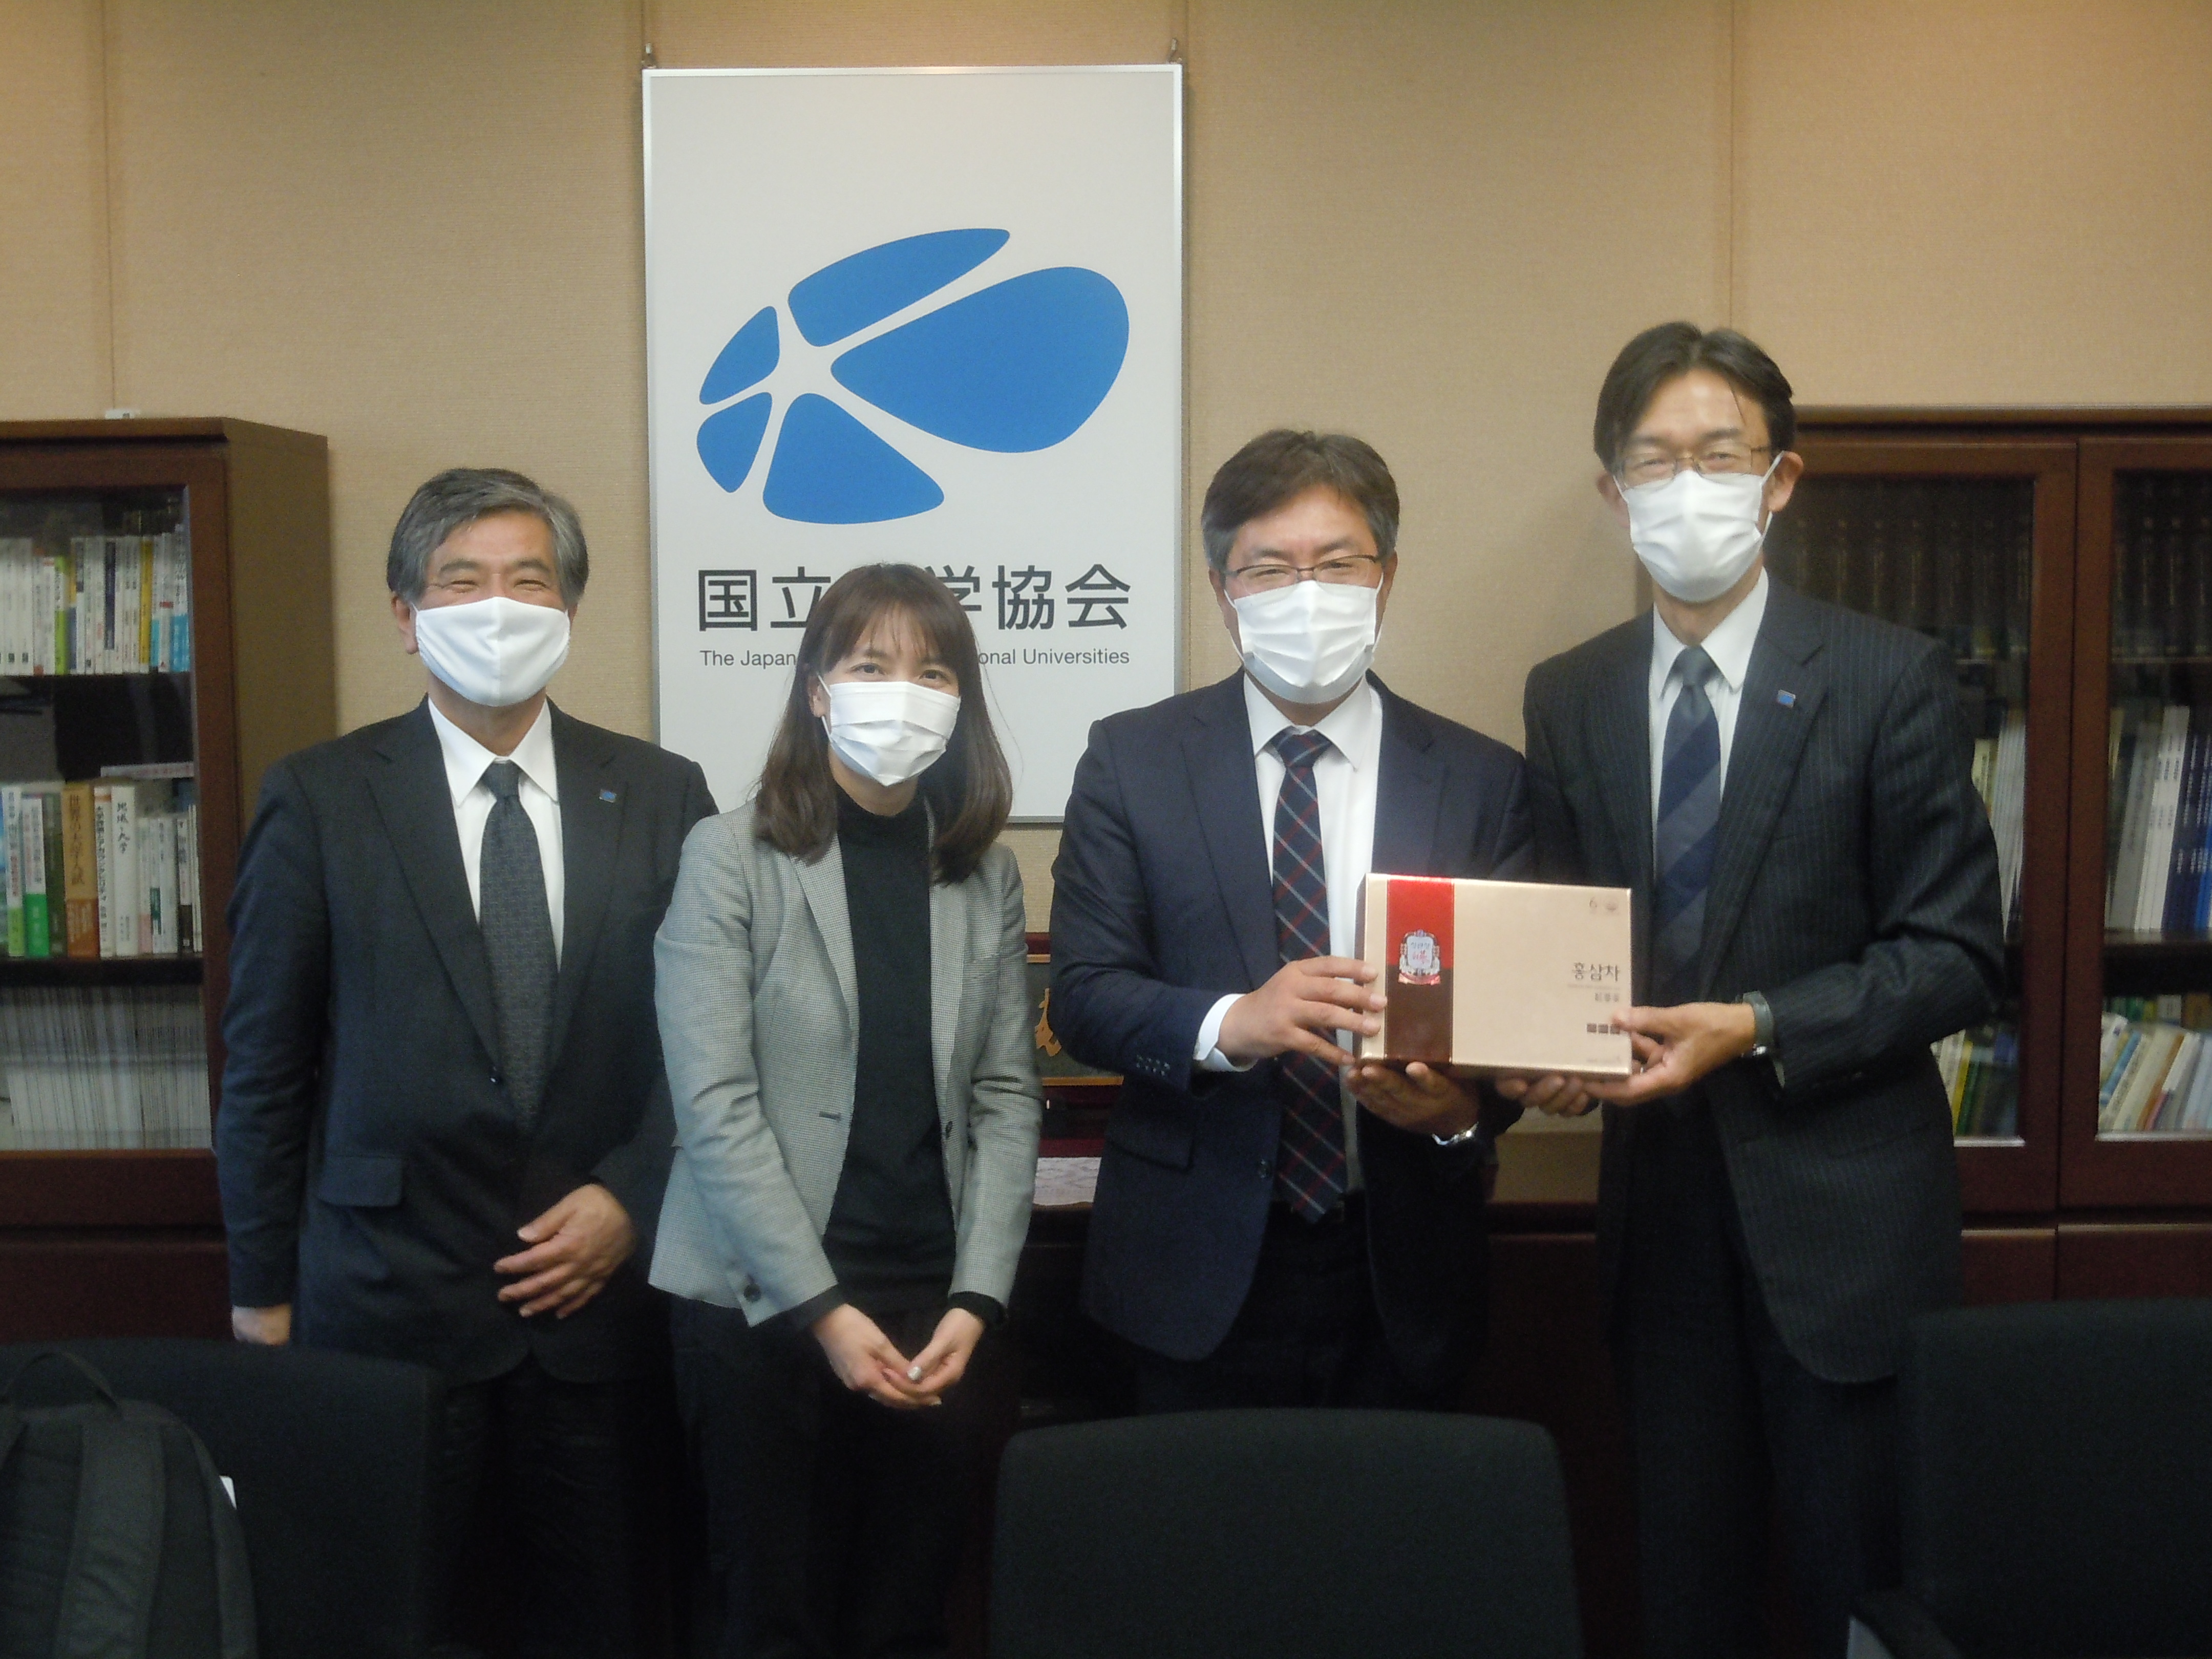 Mr. Yang, First Secretary, presents a commemorative gift to Dr. Yamaguchi, Senior Managing Director of JANU